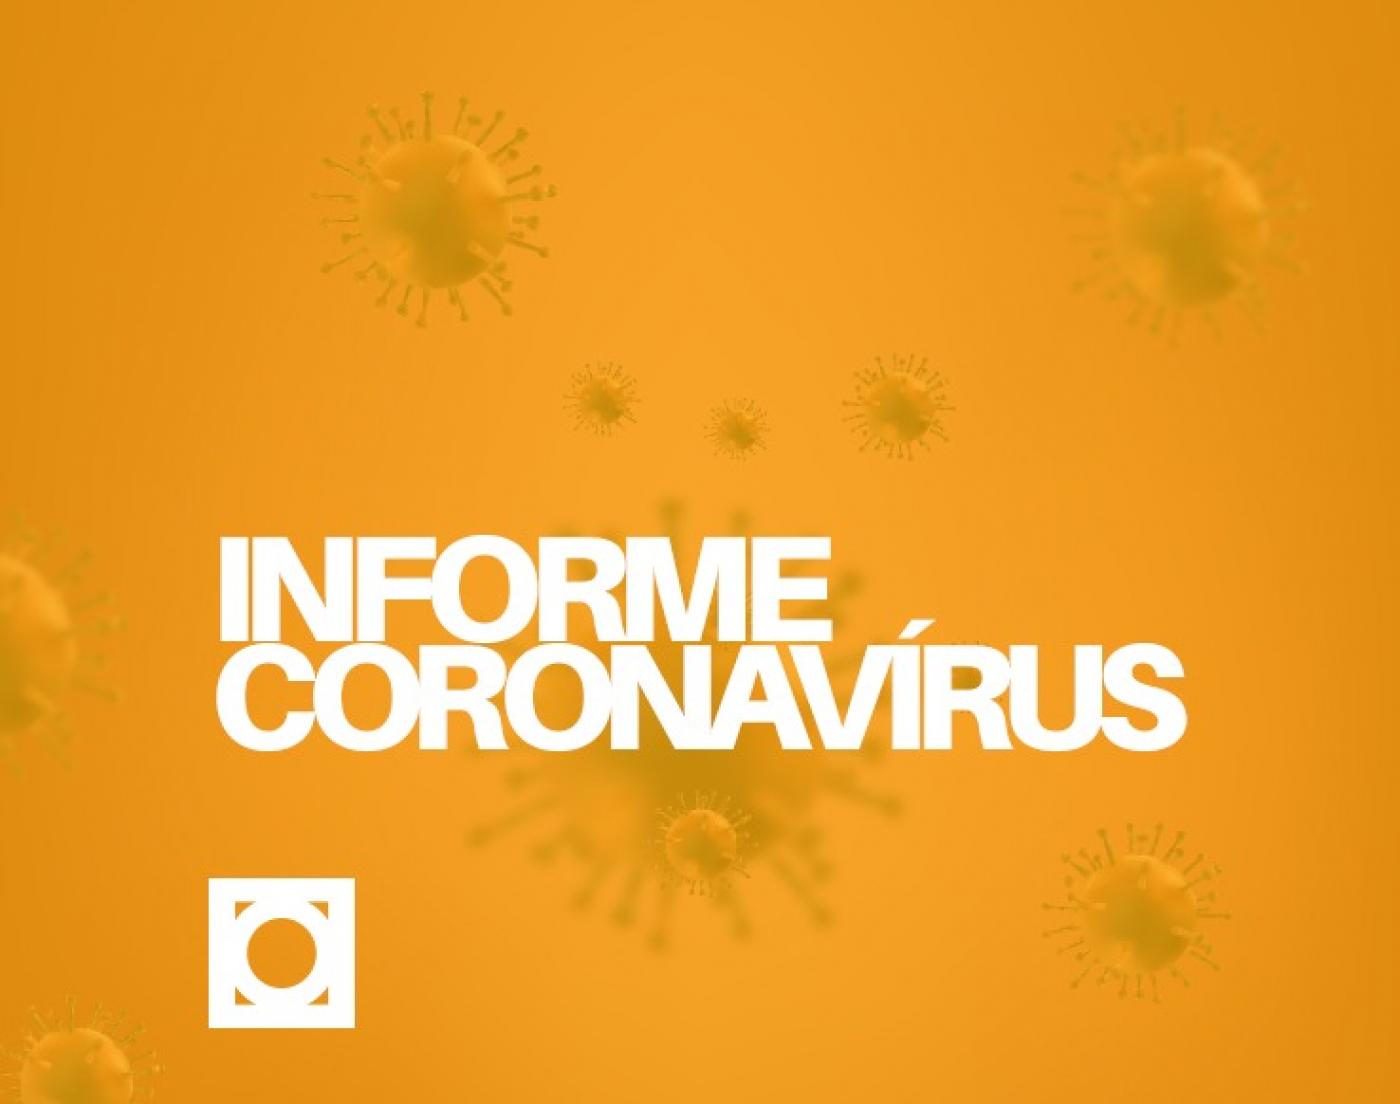 selo do informe coronavirus #paratodosverem